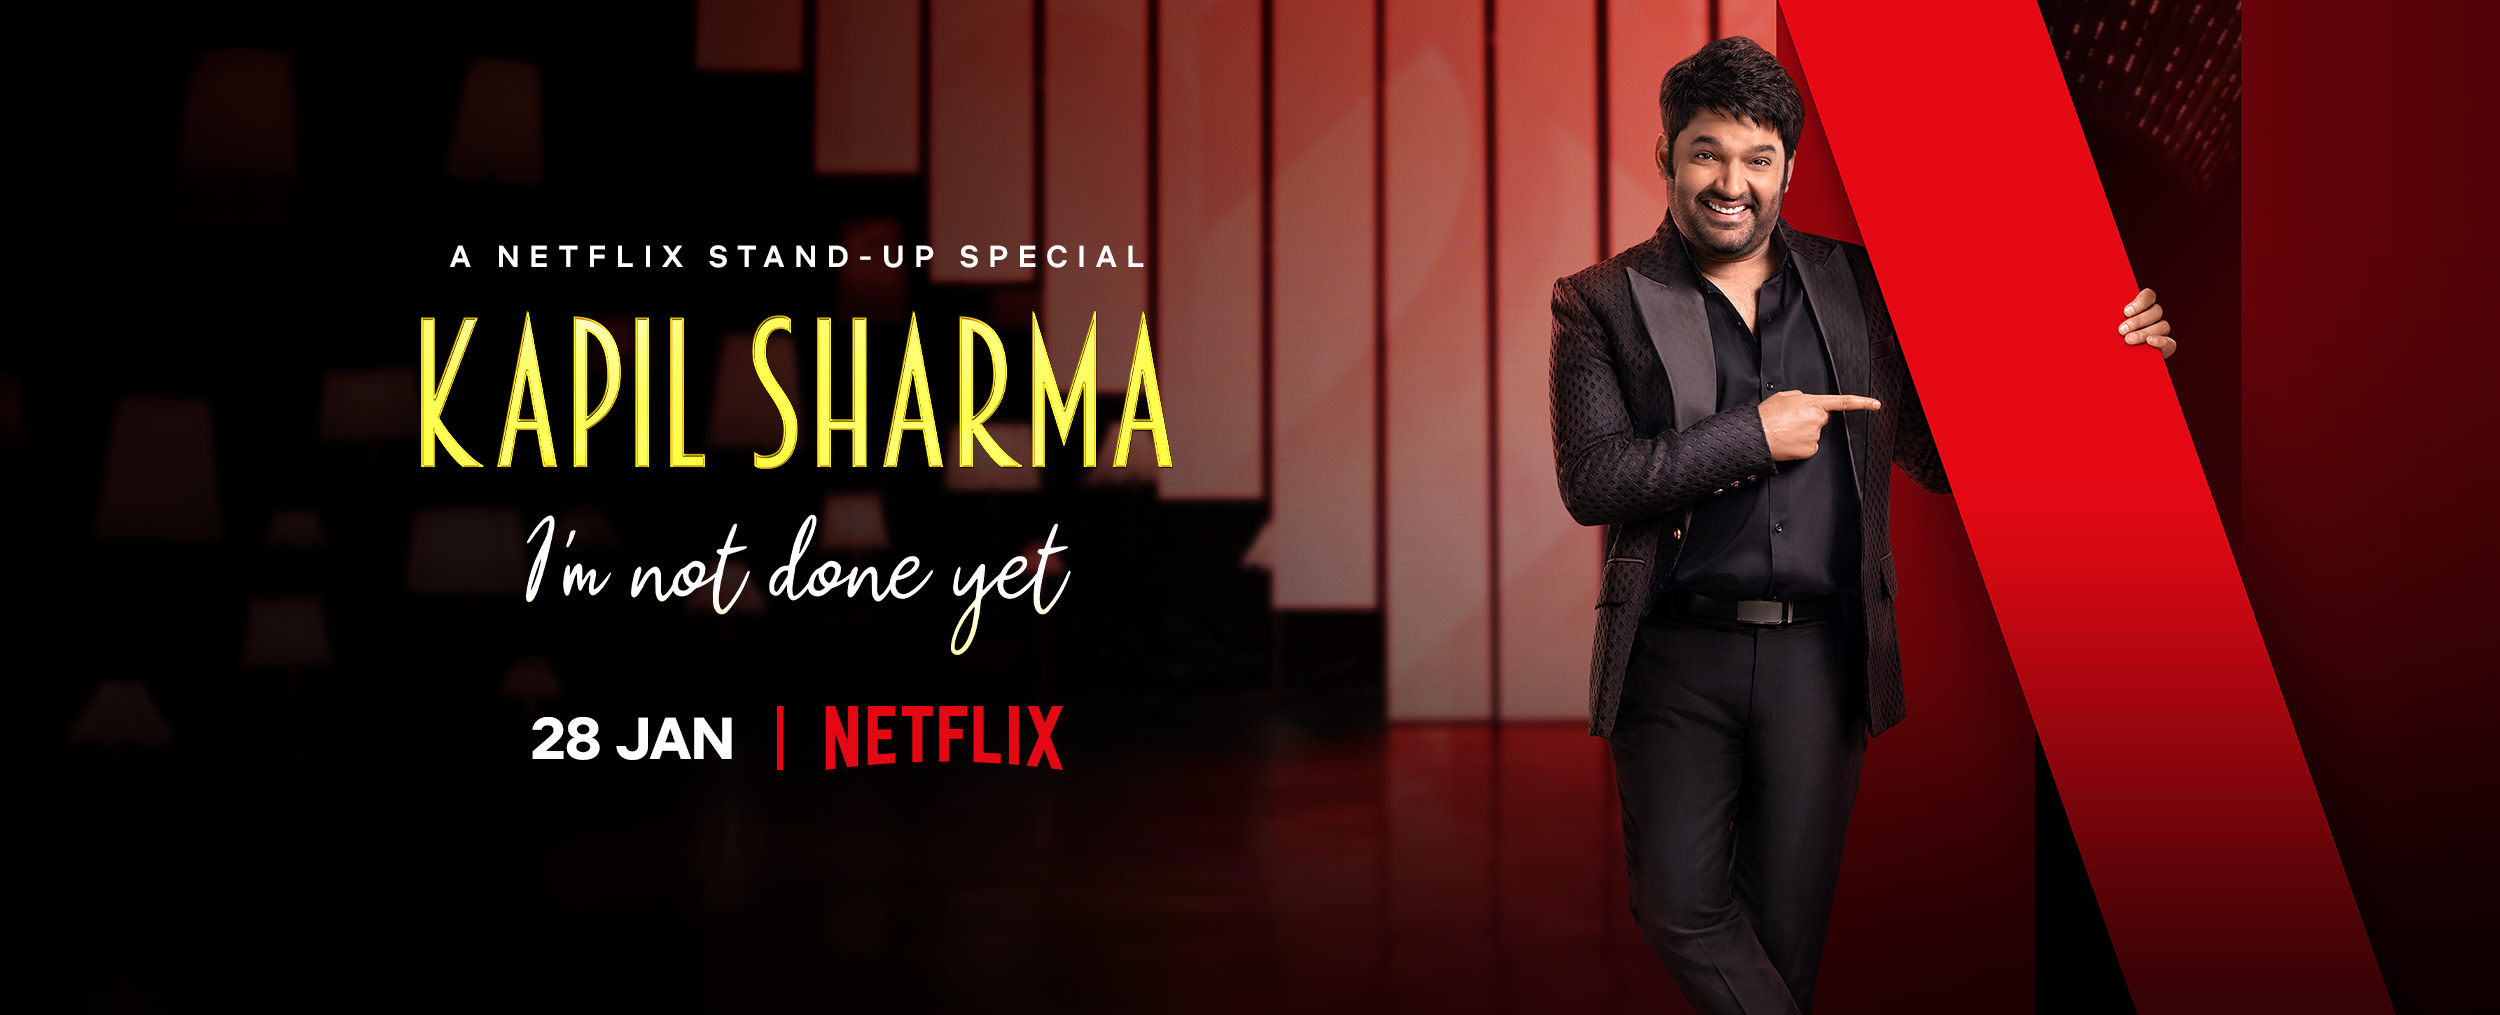 Kapil Sharma’s Netflix Special